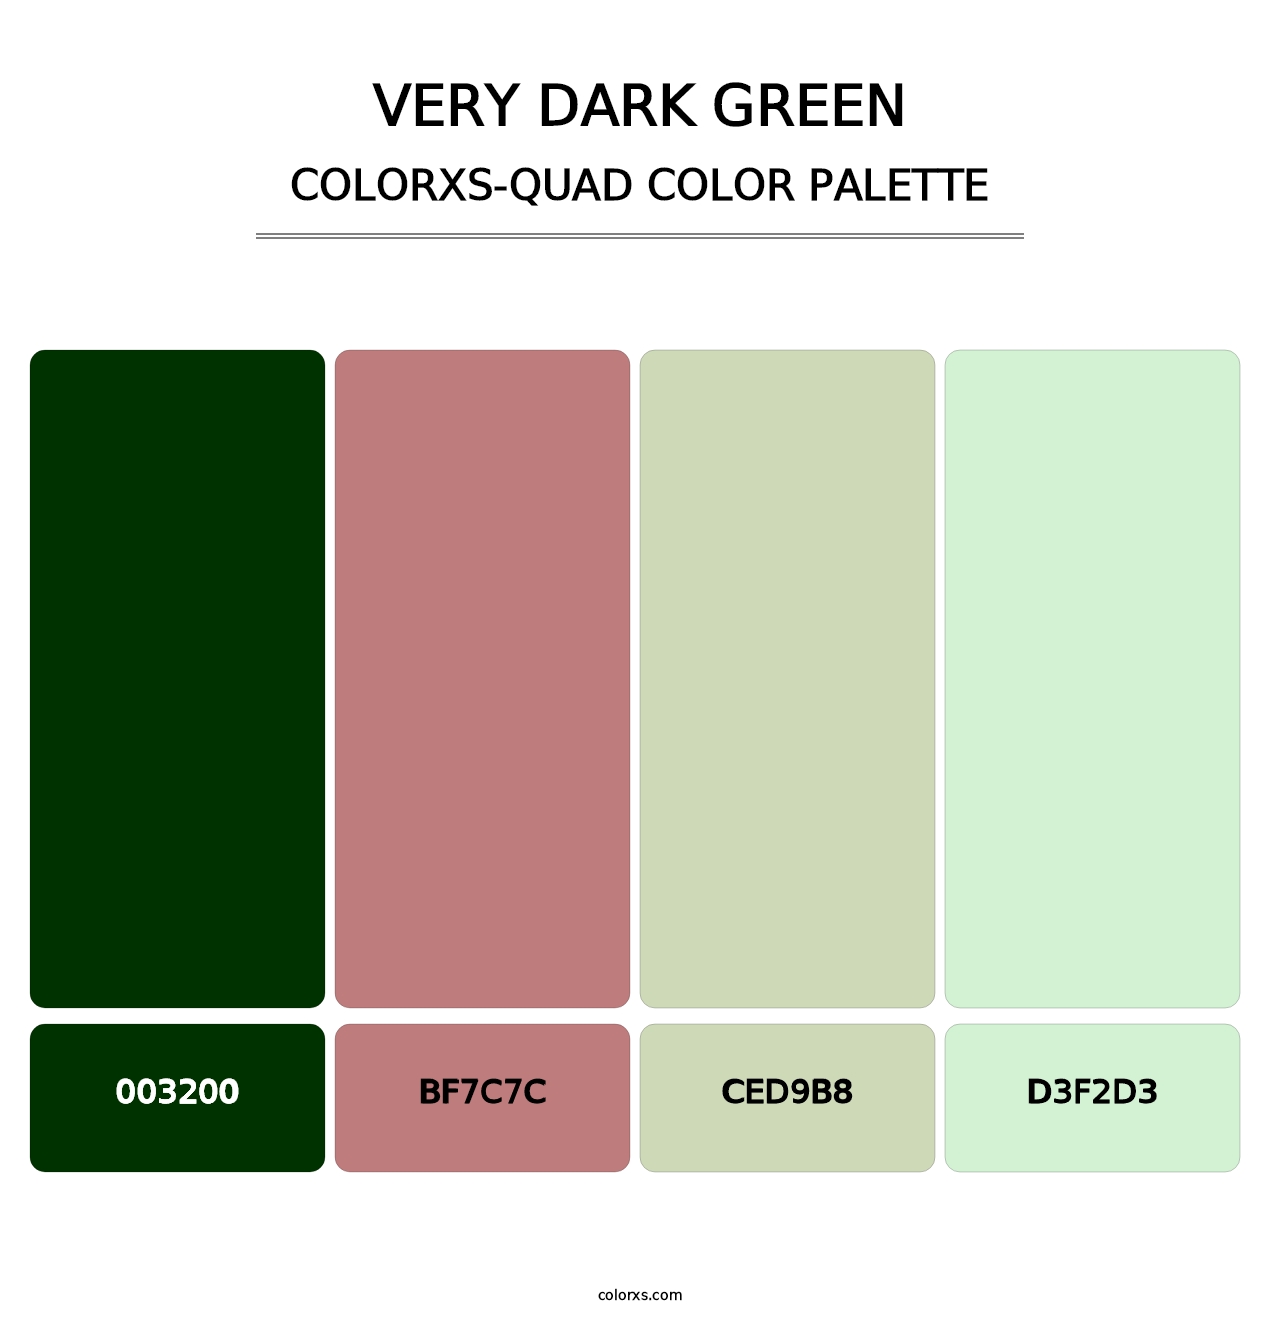 Very Dark Green - Colorxs Quad Palette